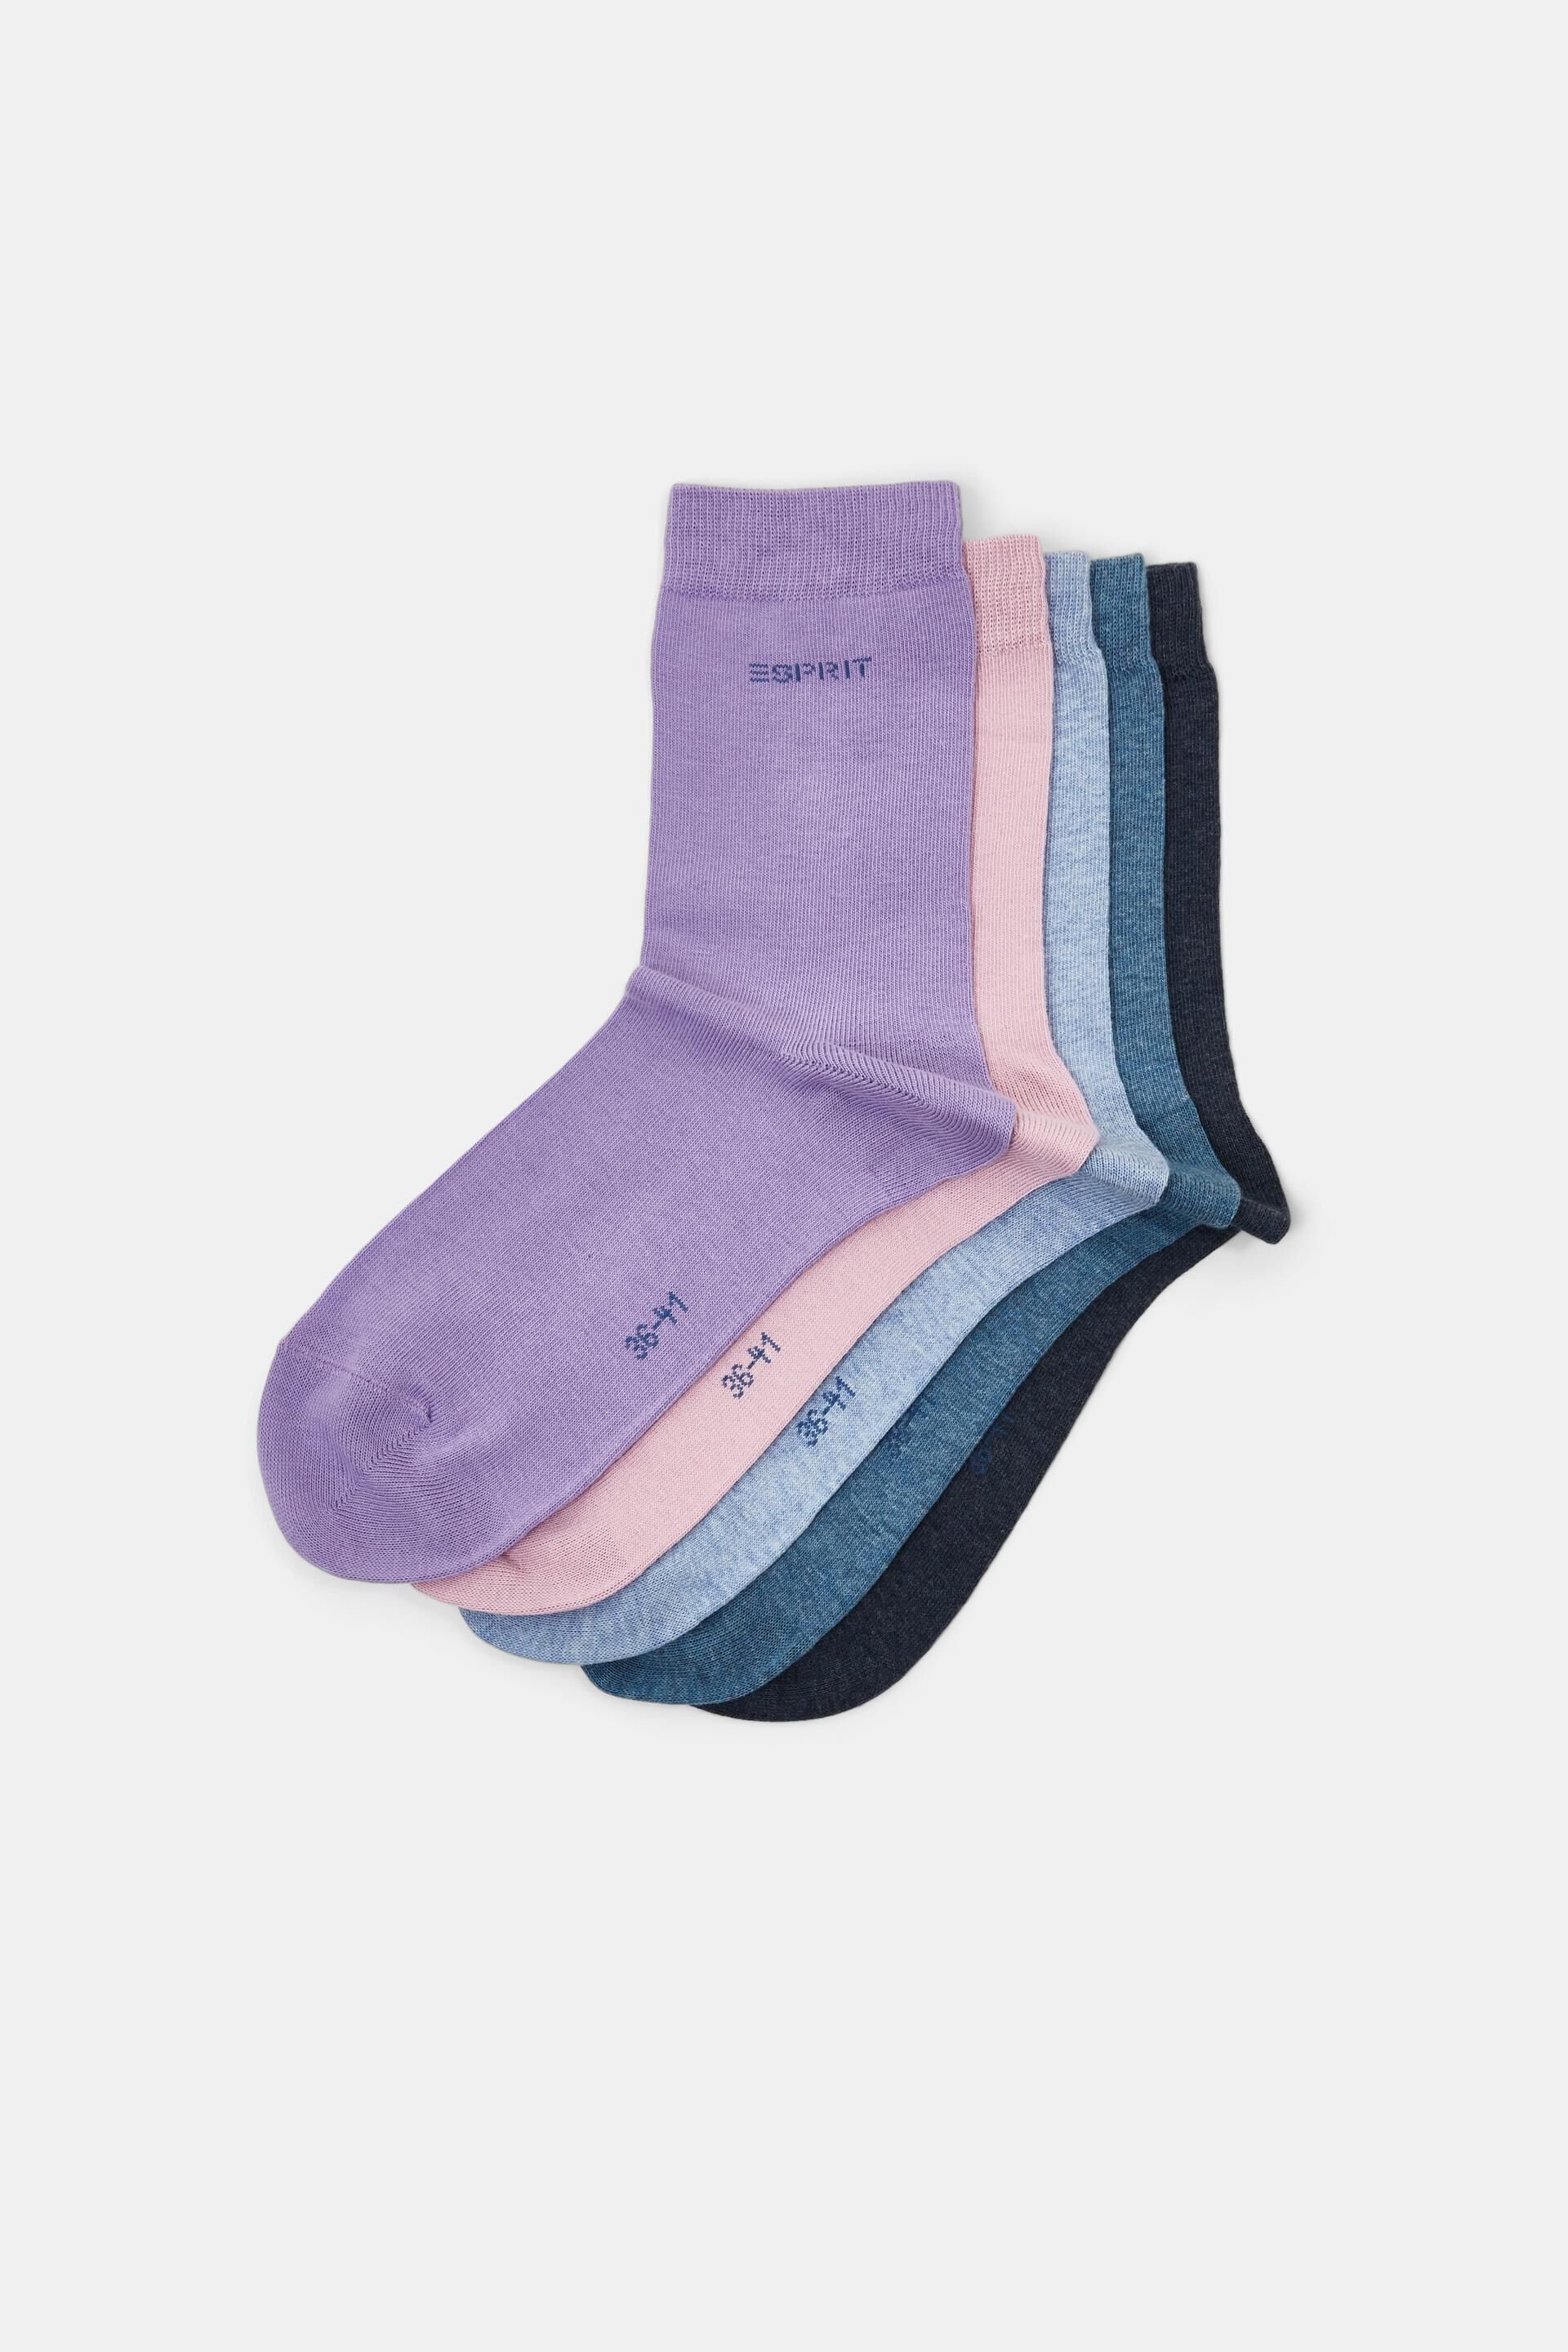 Esprit socks, cotton organic of 5-pack